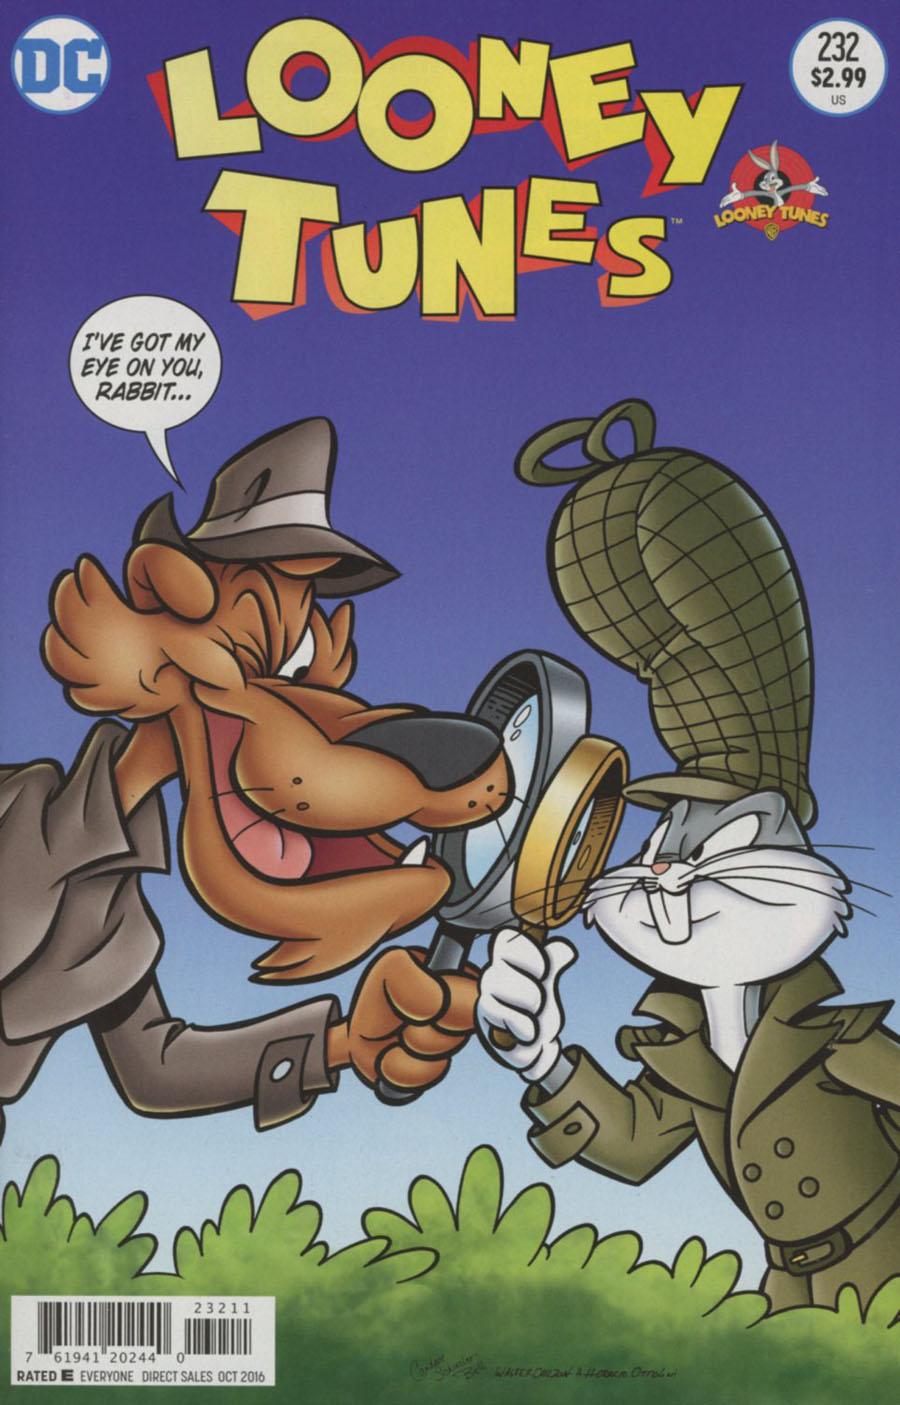 Looney Tunes Vol. 3 #232